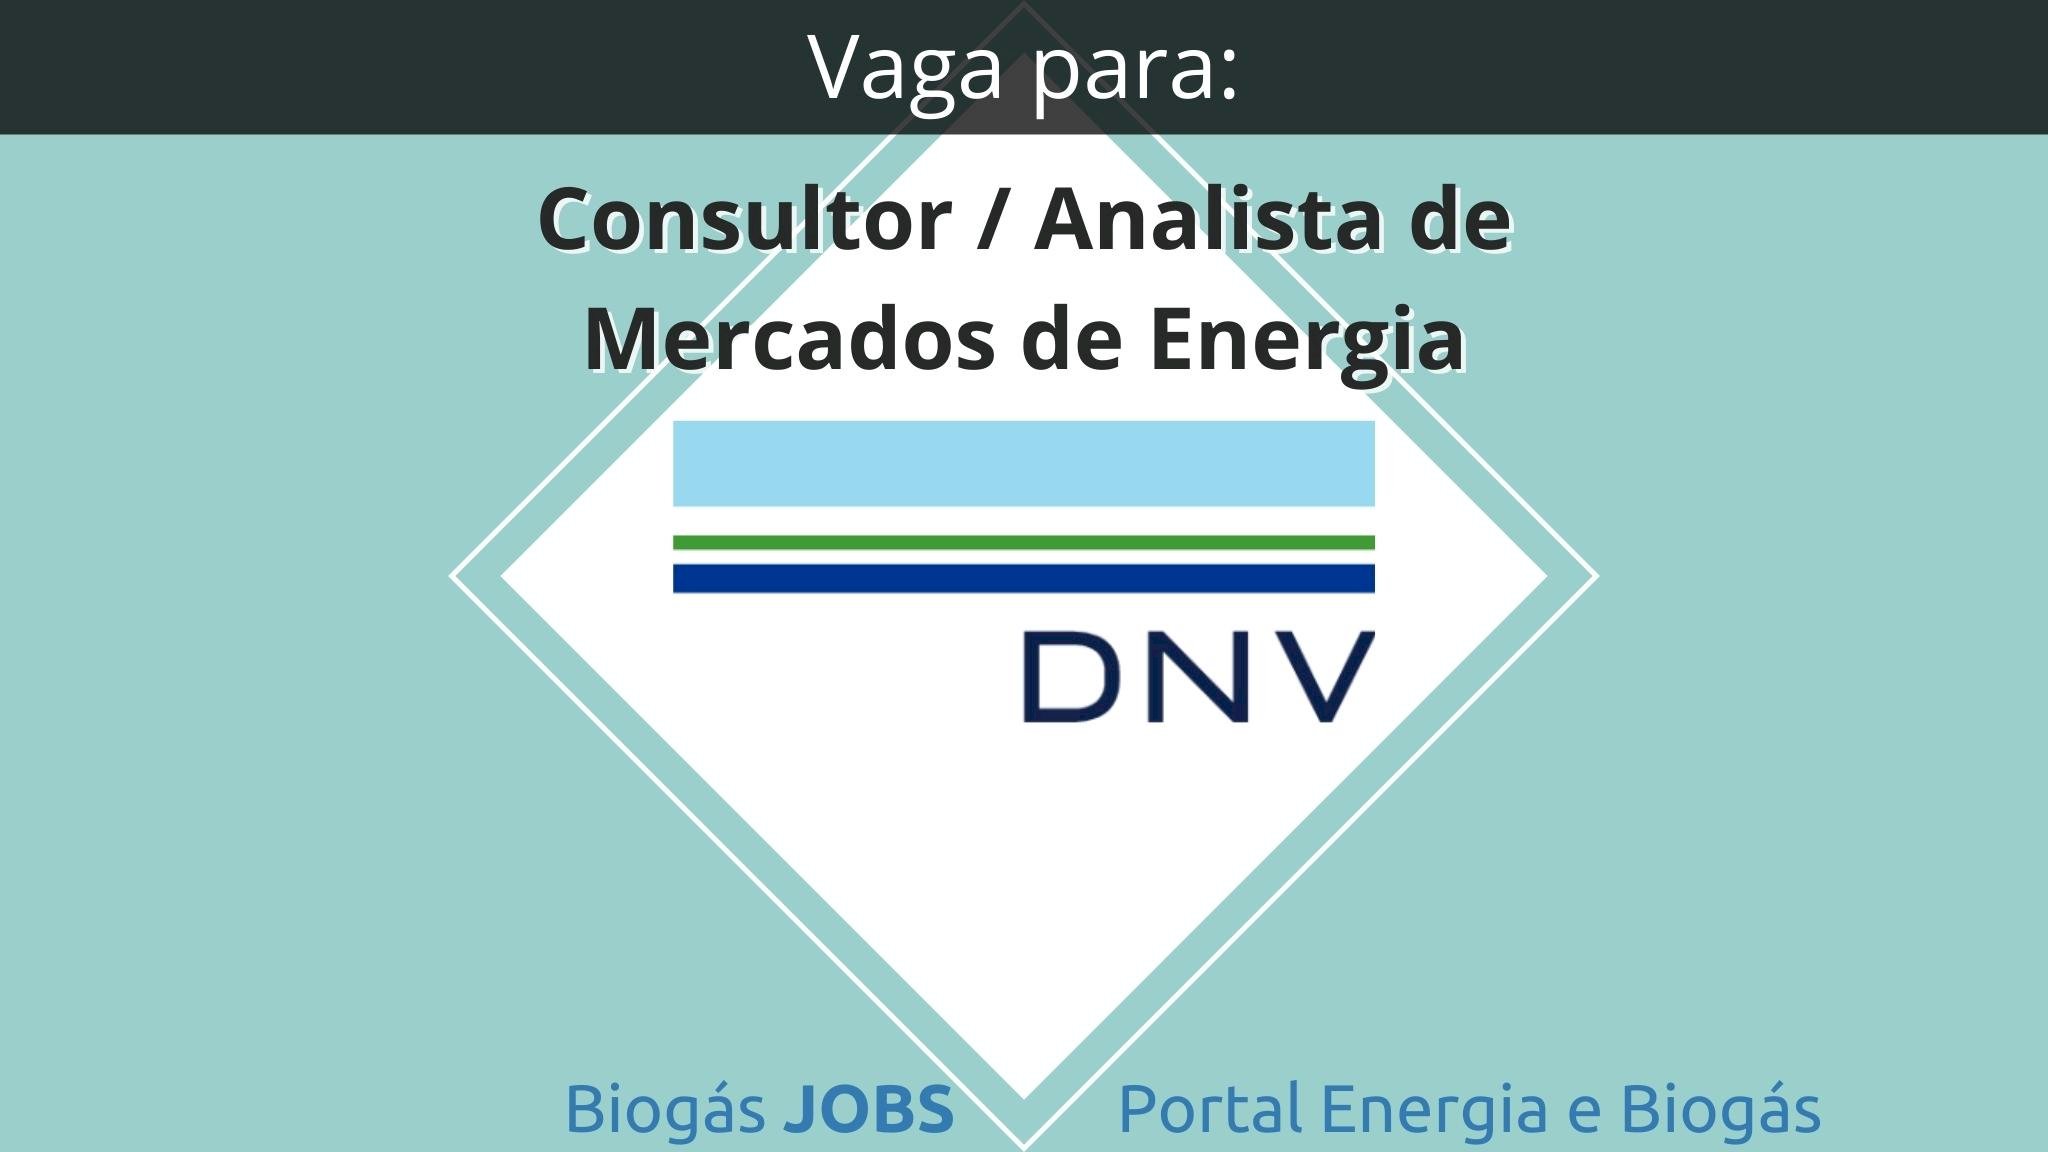 Vaga para Consultor / Analista de Mercados de Energia